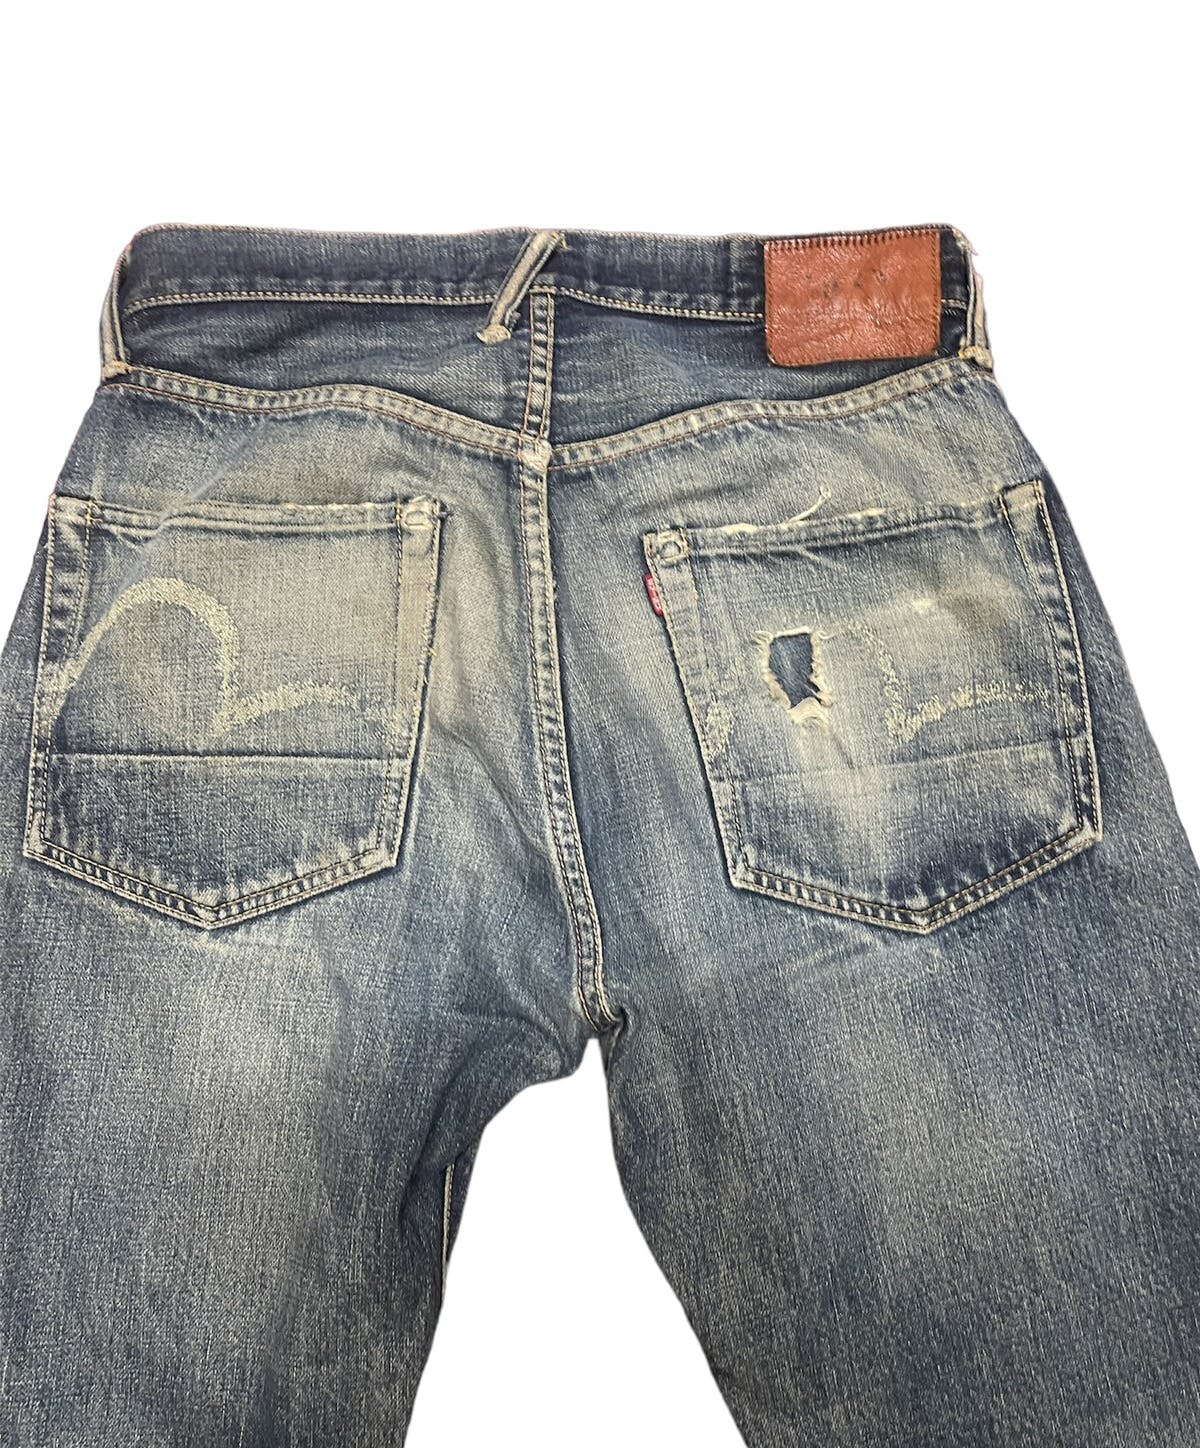 Evisu Denim distressed selvedge jeans - 3